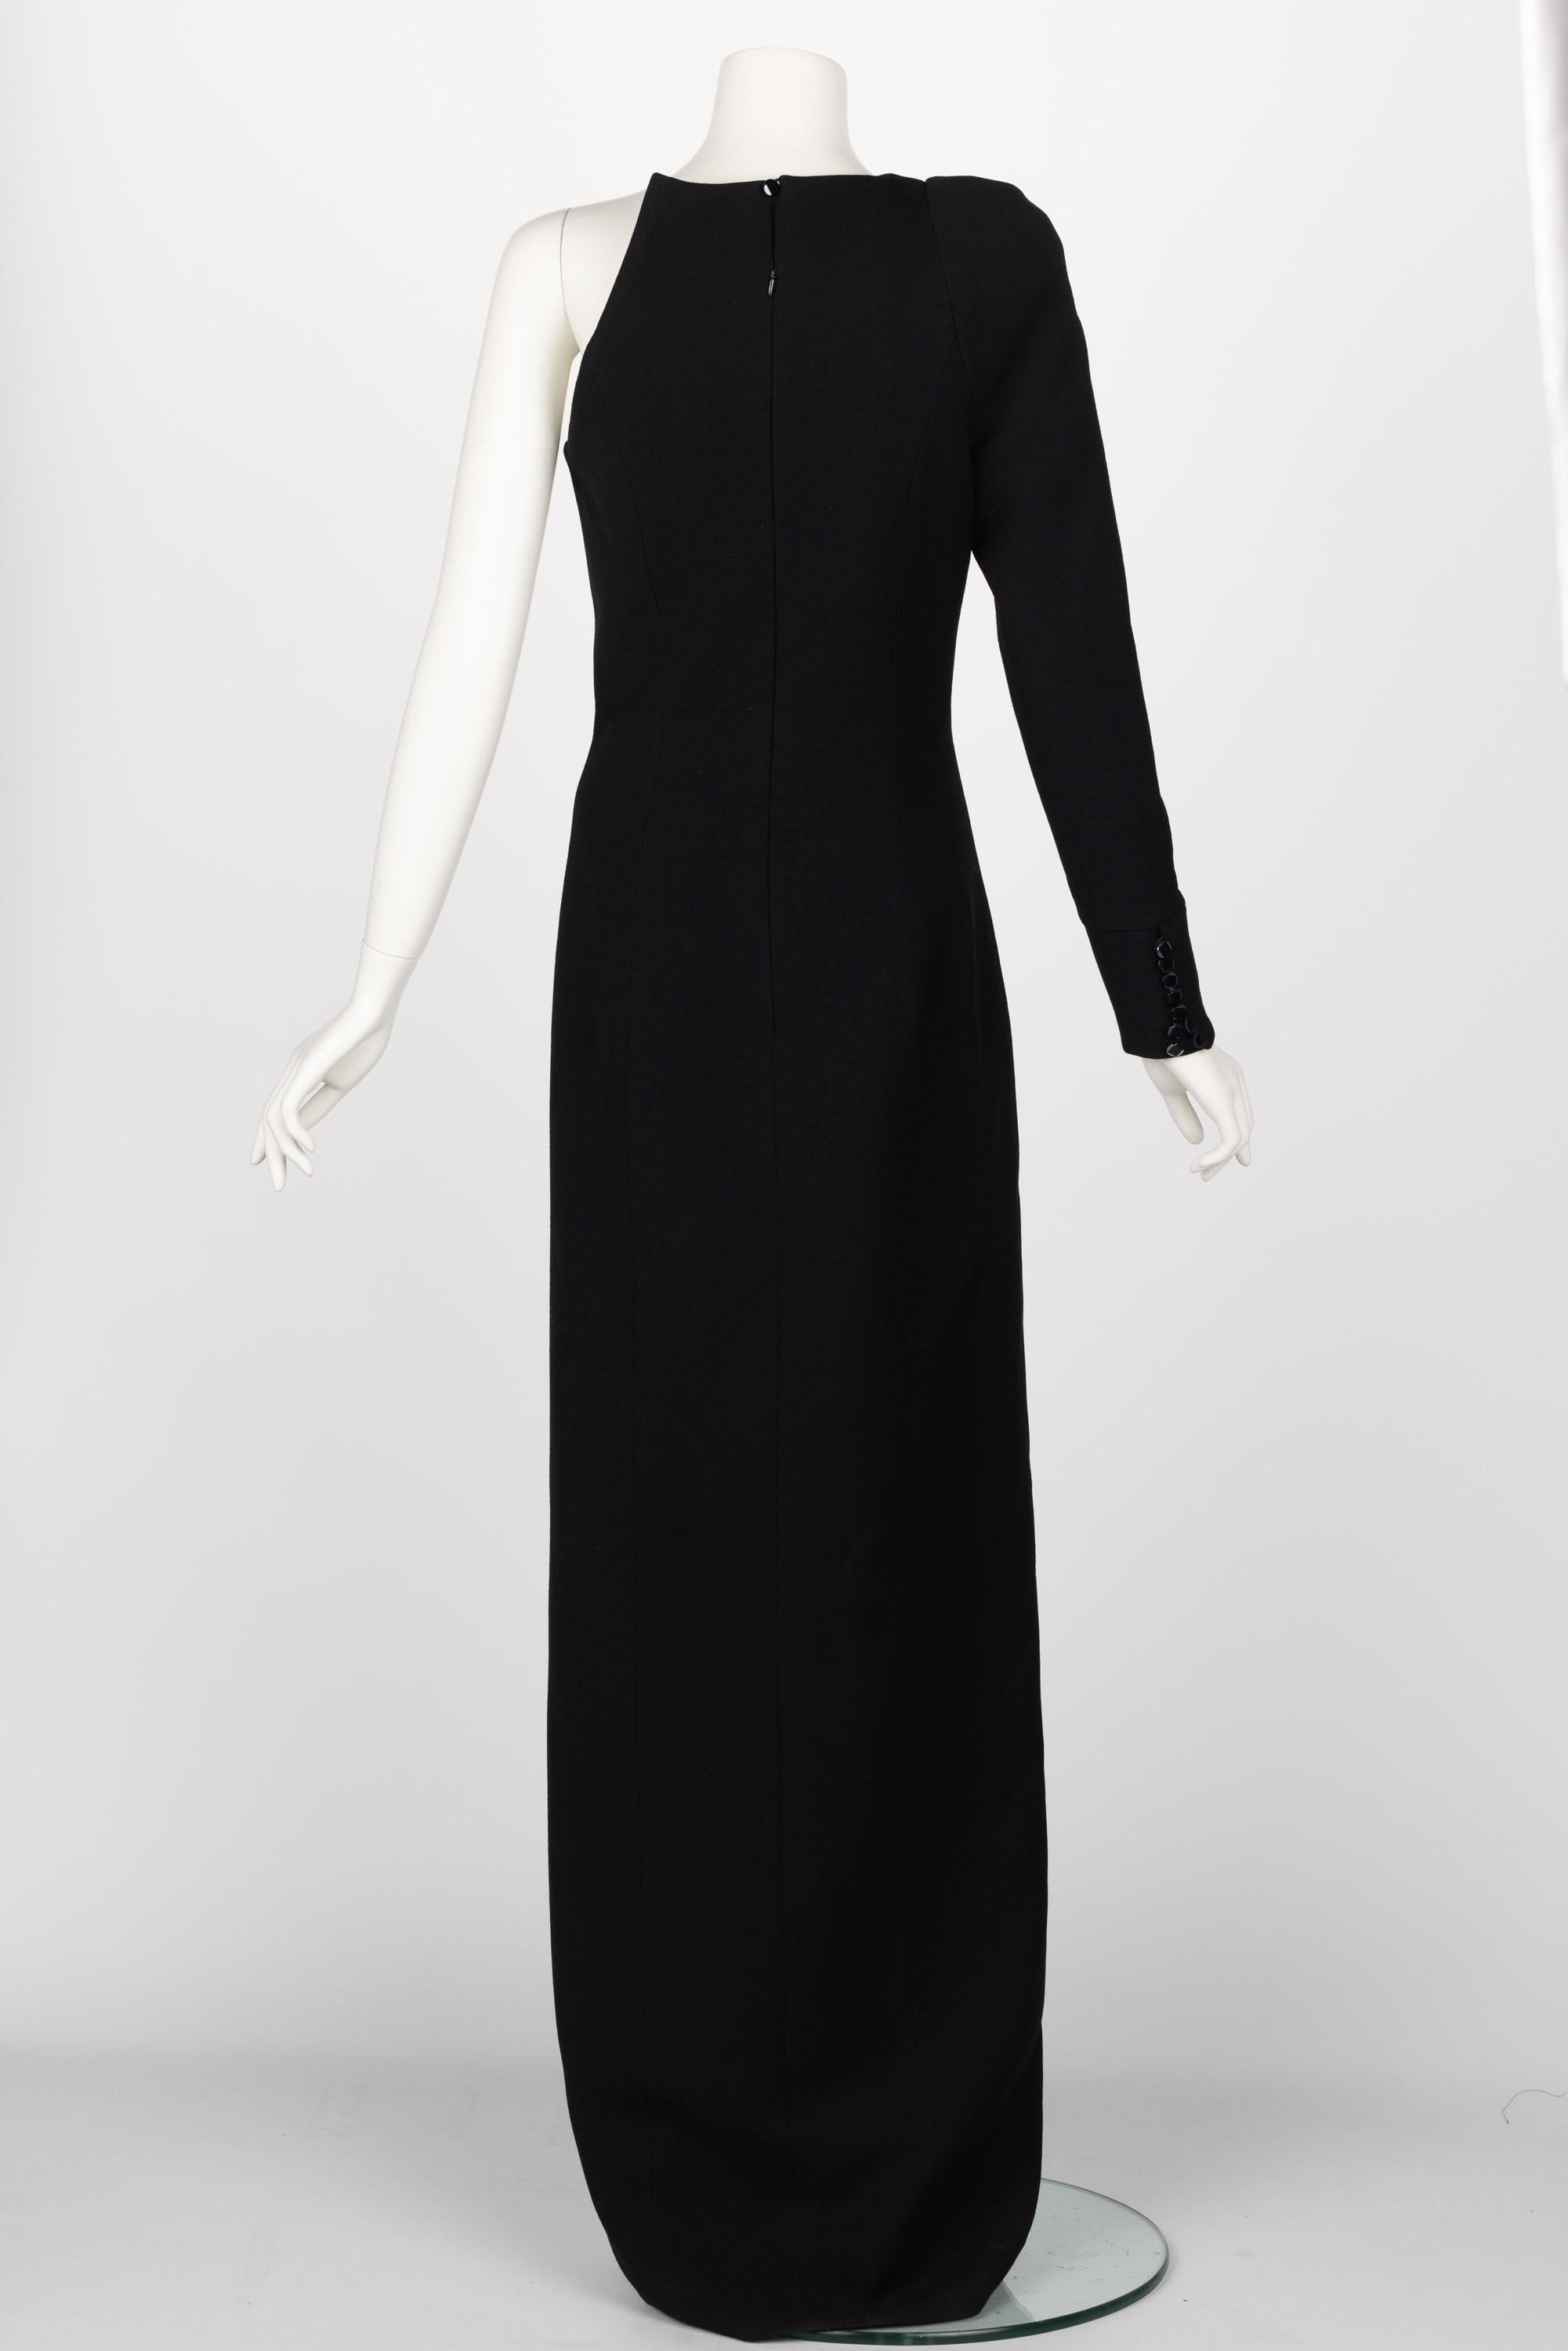 Ronald van der Kemp Demi Couture Fall 2018 Sculptural Black Dress  For Sale 1